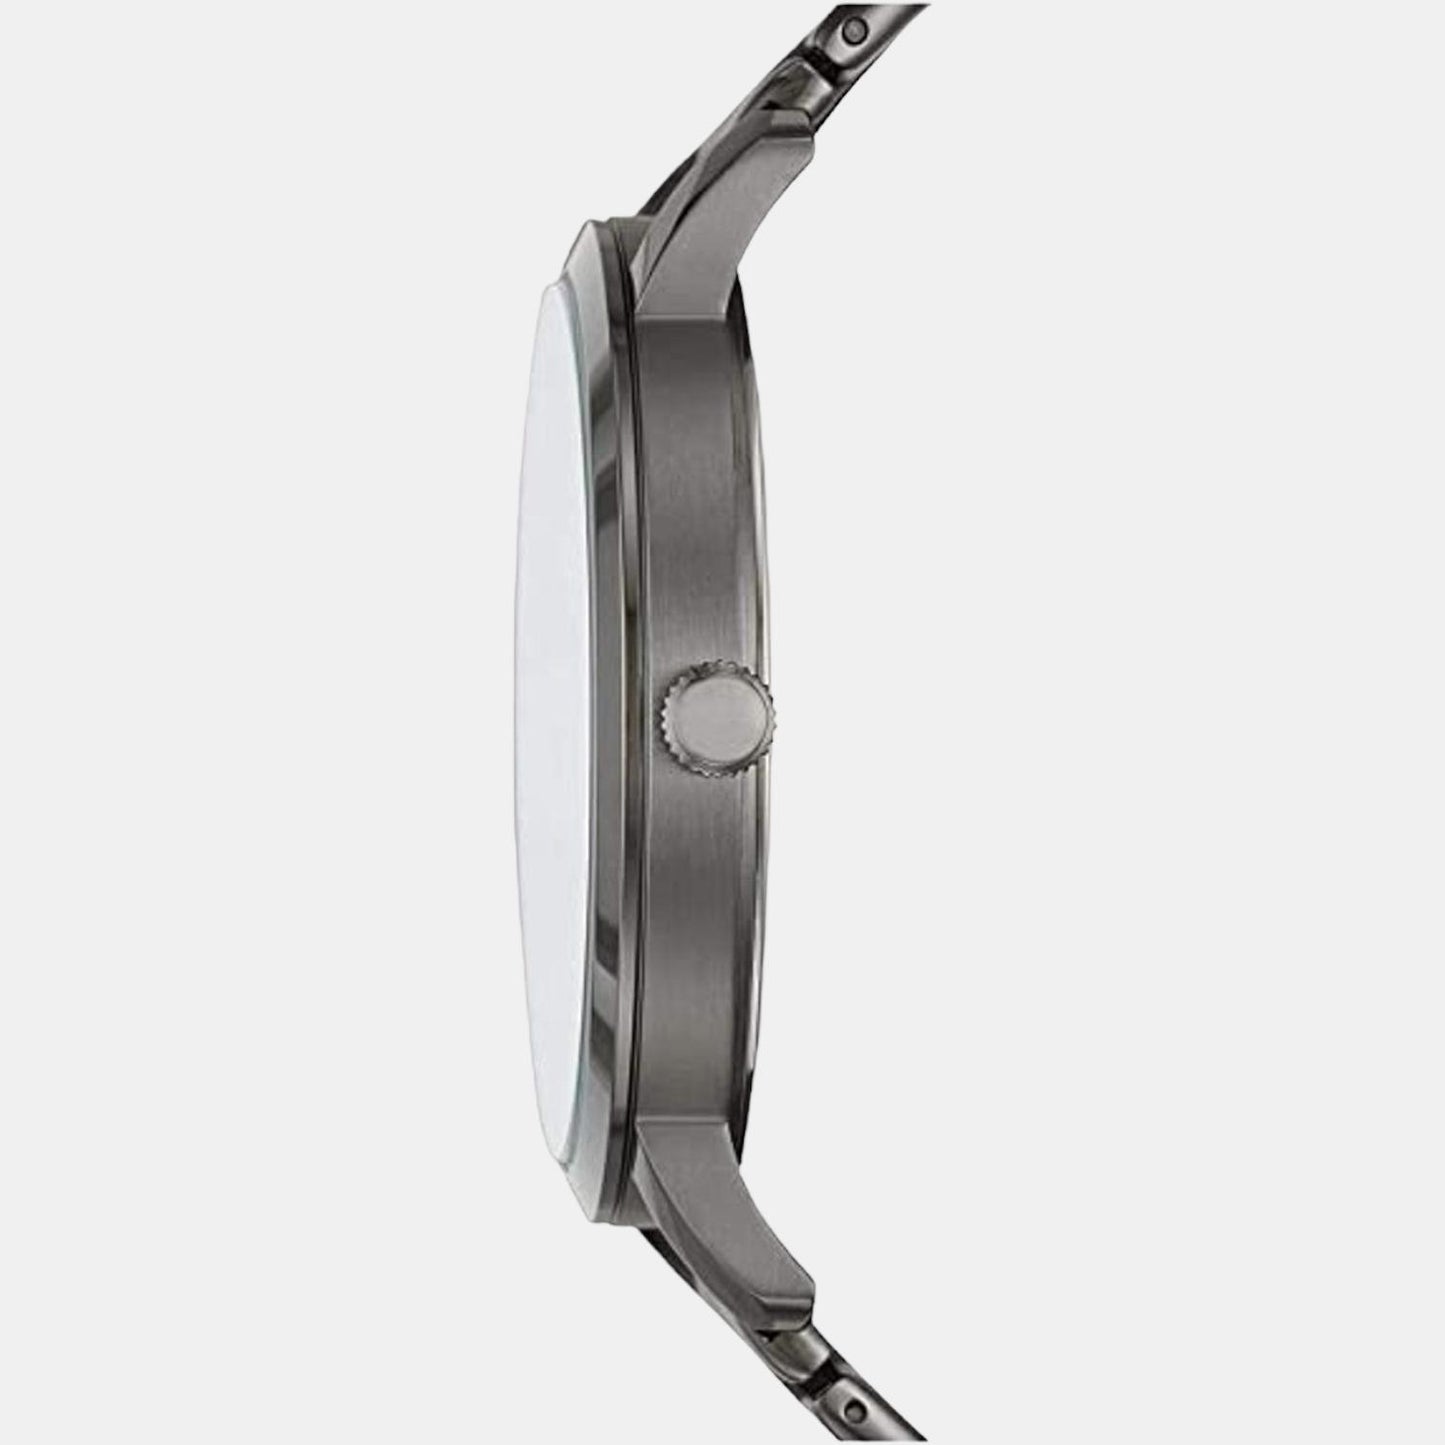 Male Black Analog Stainless Steel Watch BQ2419